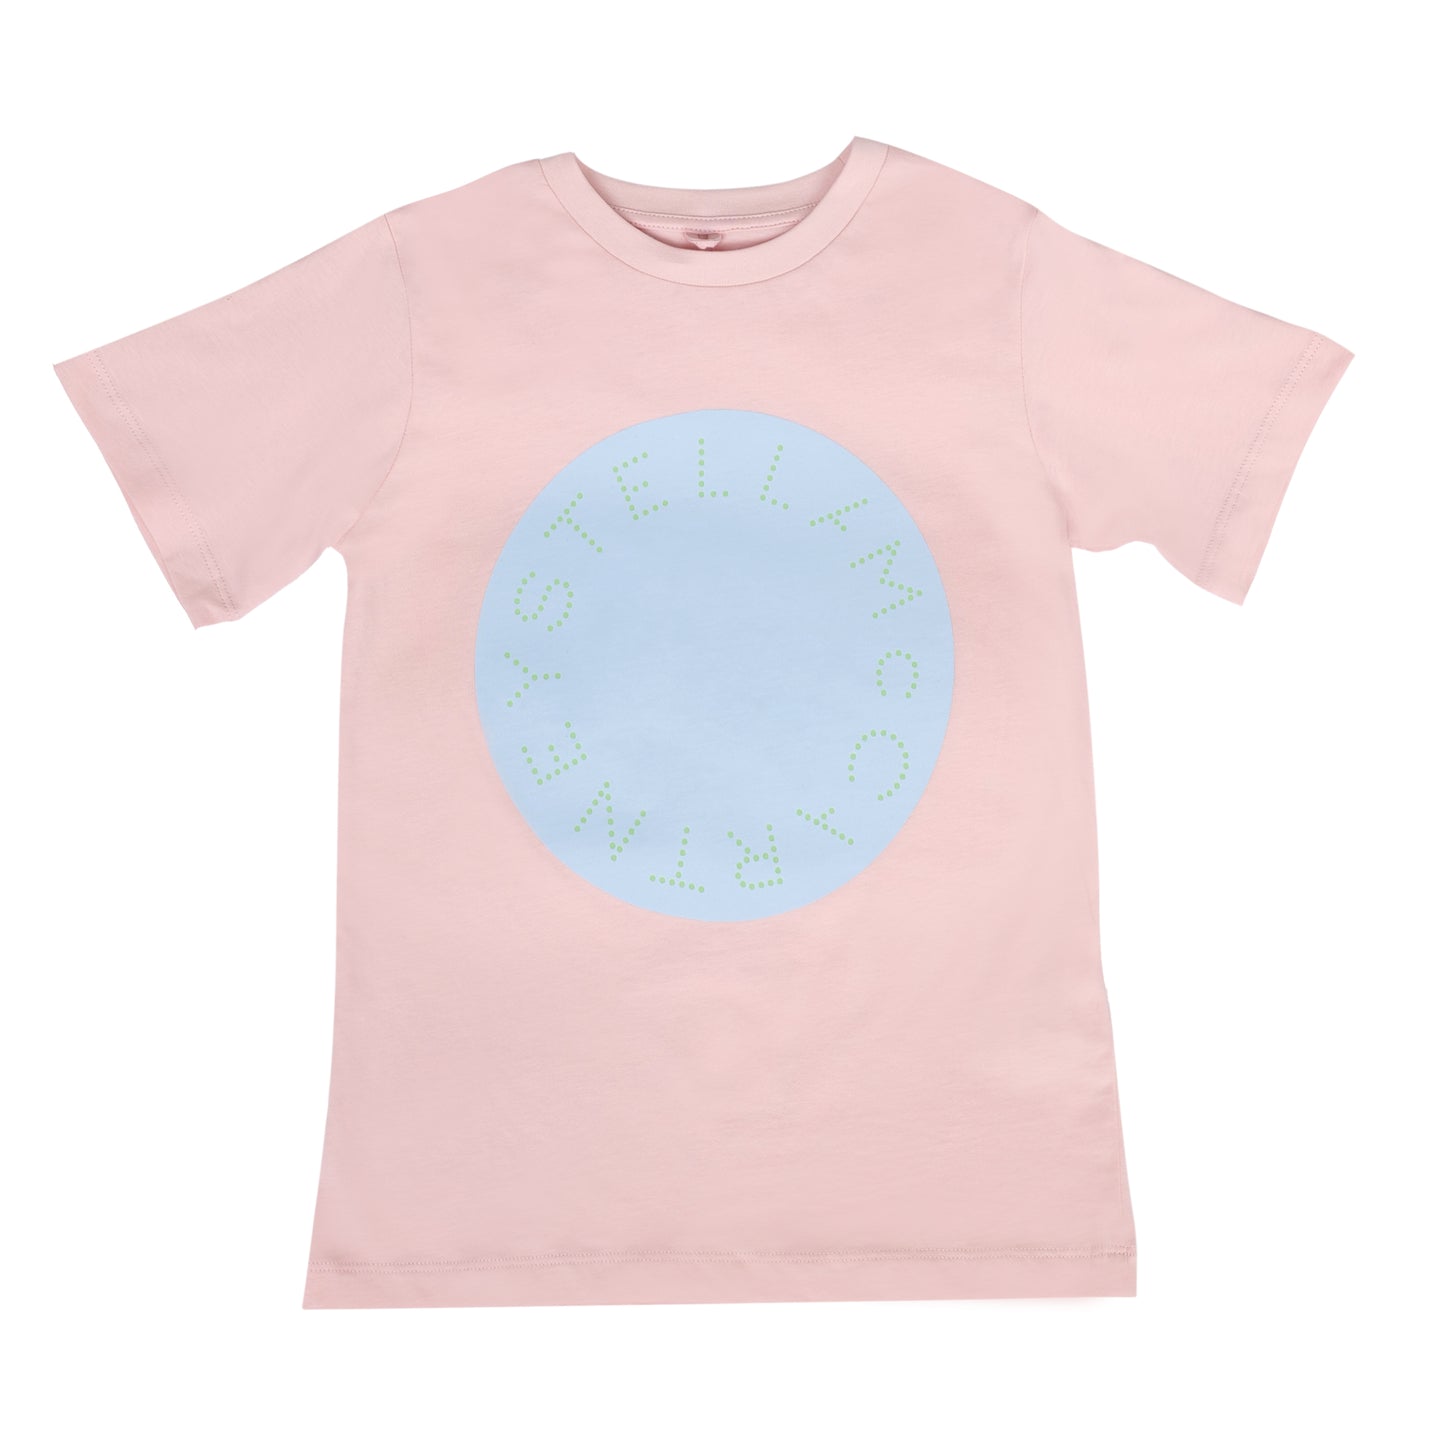 Girls Crewneck T Shirt in Pale Pink